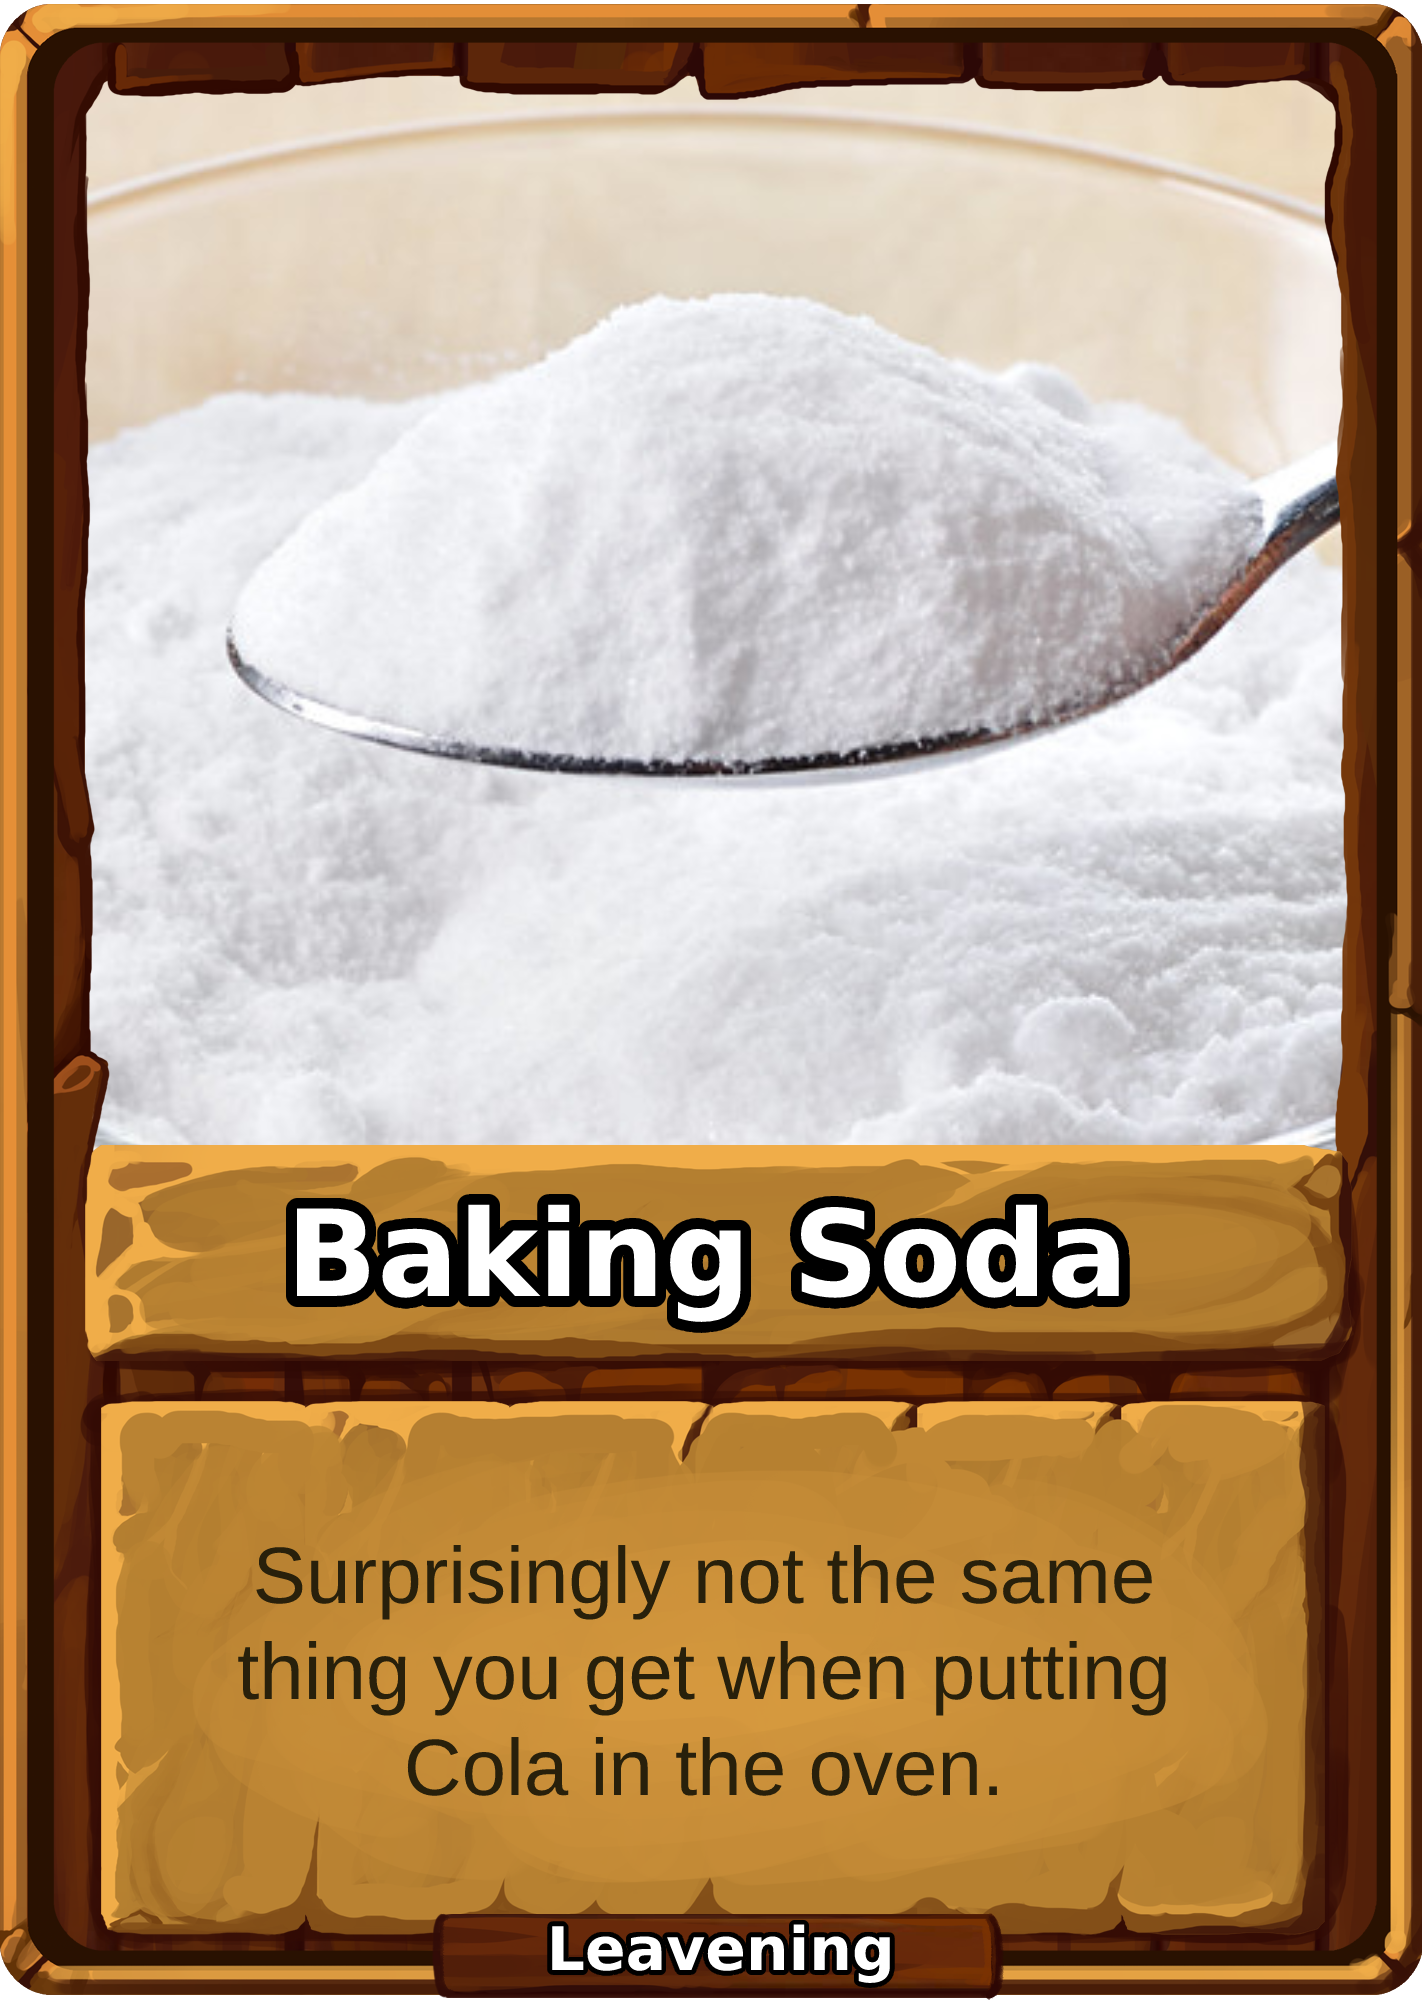 Baking Soda Card Image